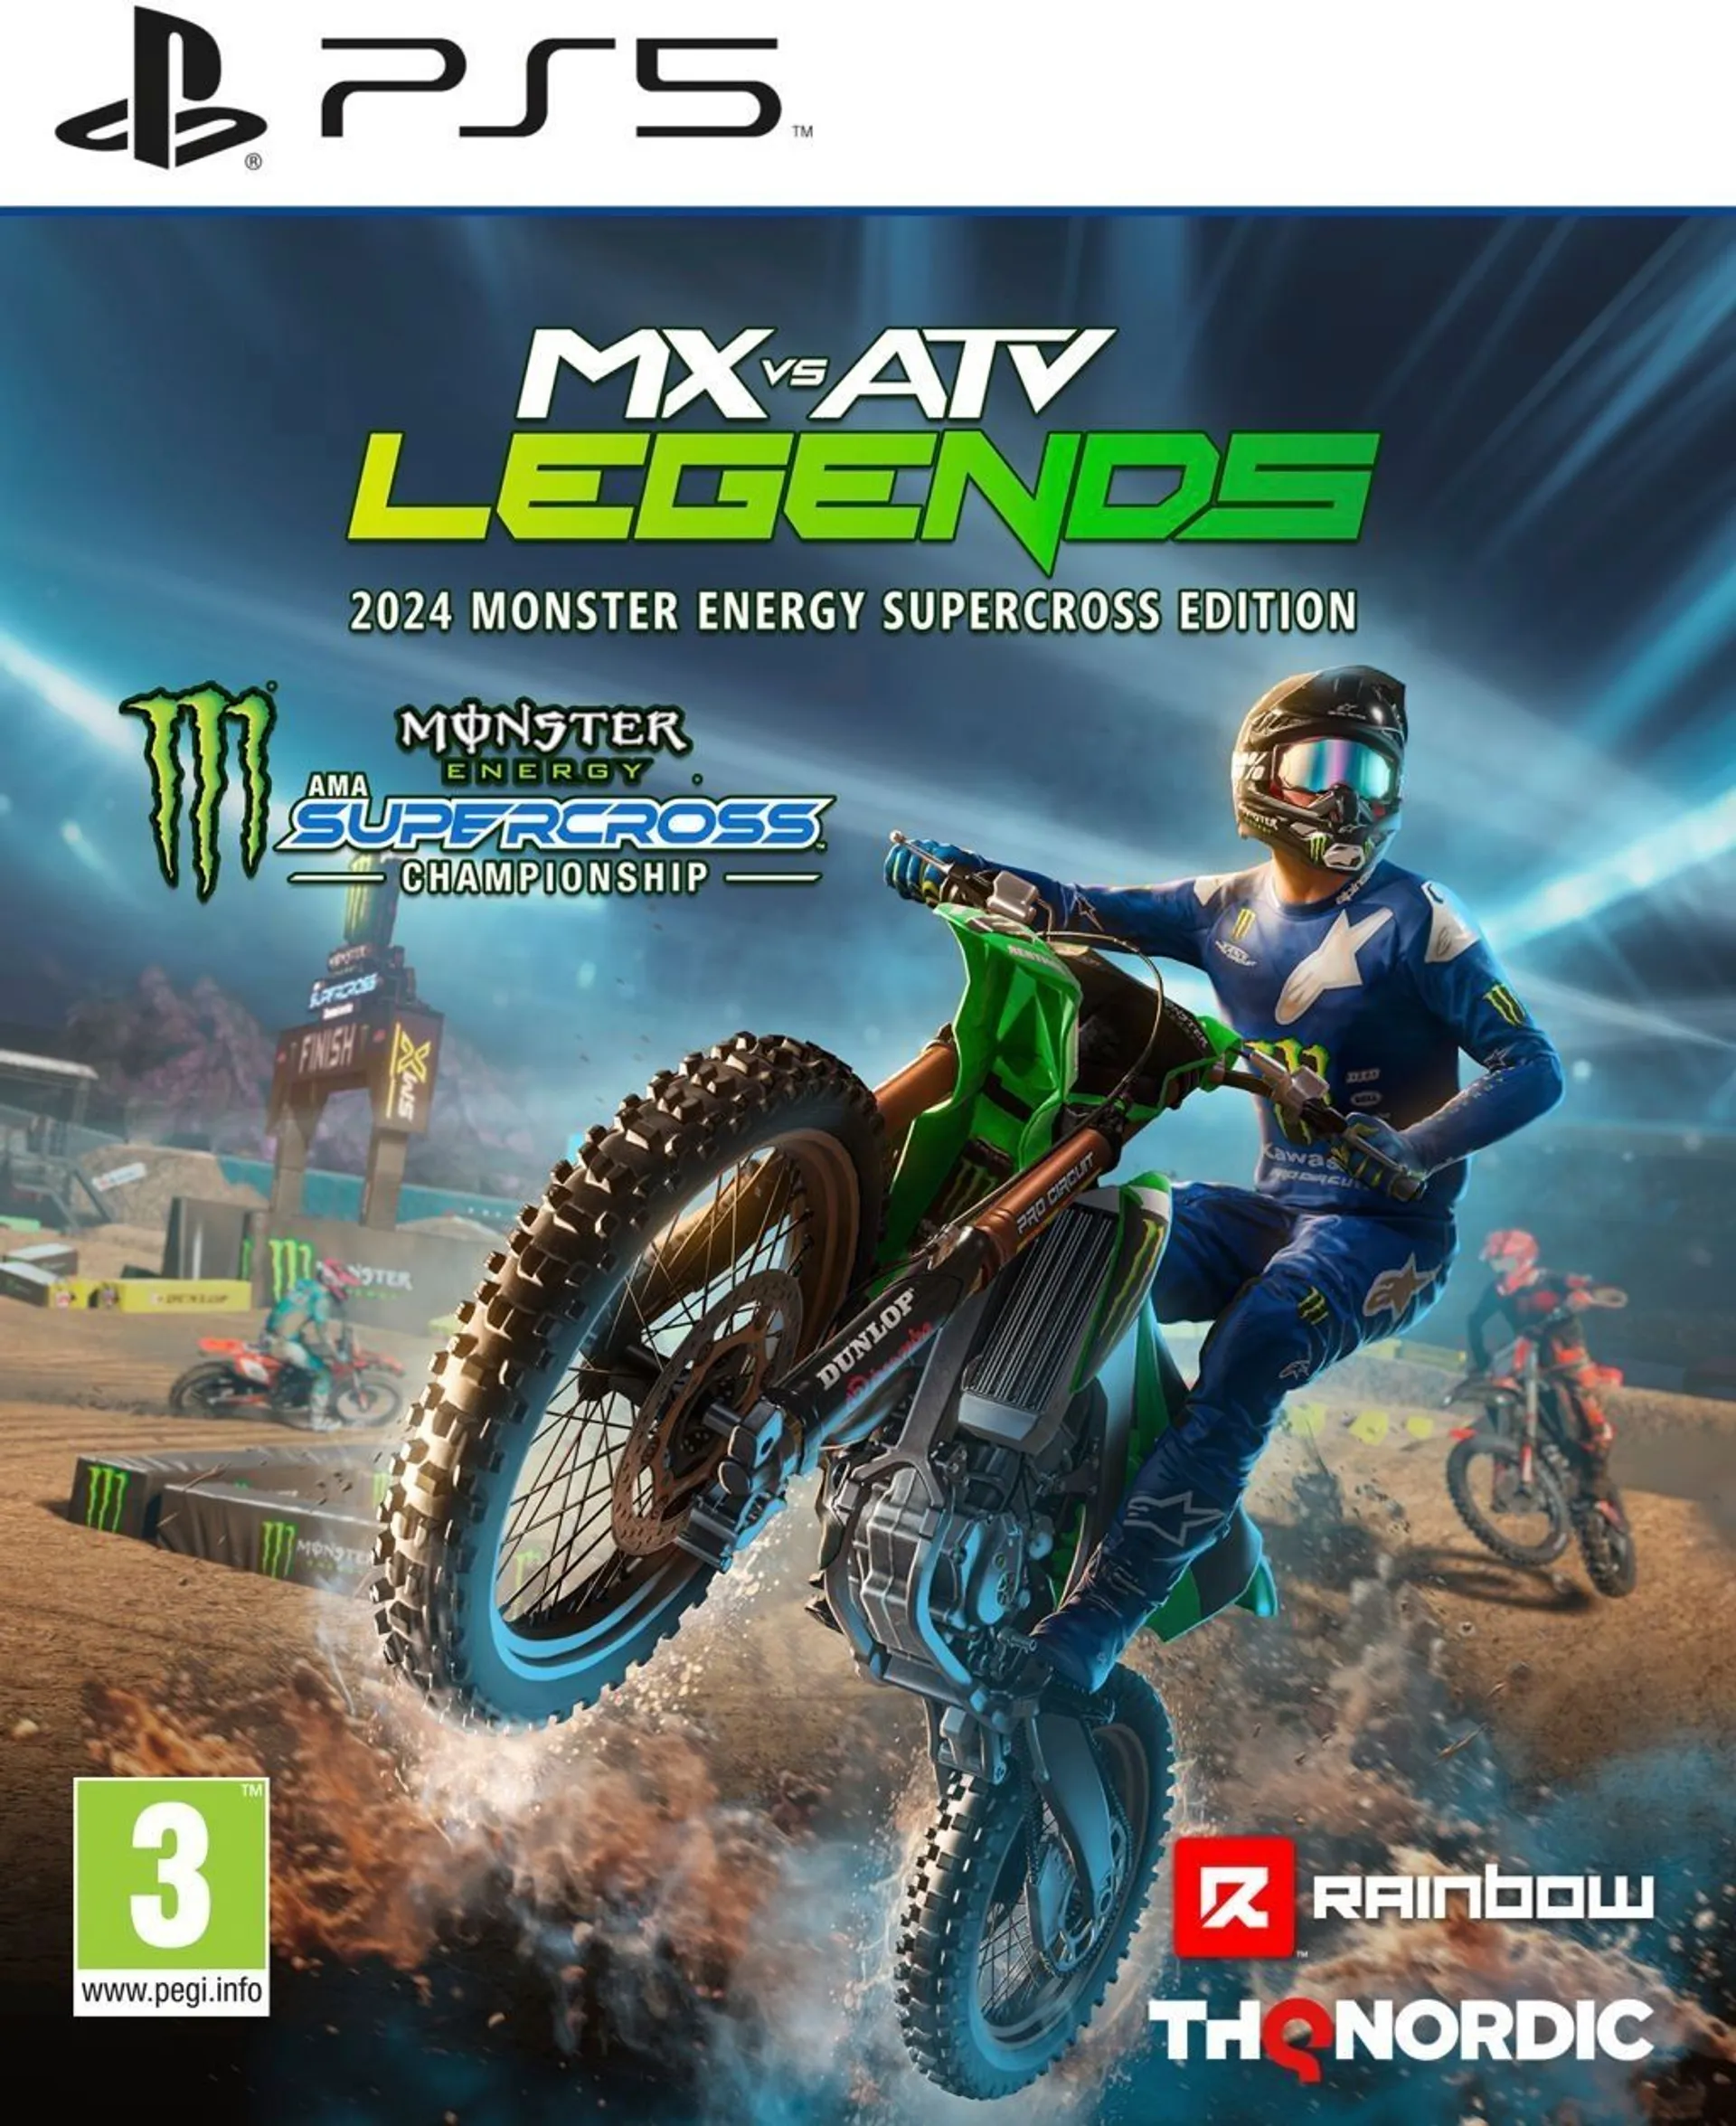 PlayStation 5 MX vs ATV Legends - 2024 Monster Energy Supercross Edition